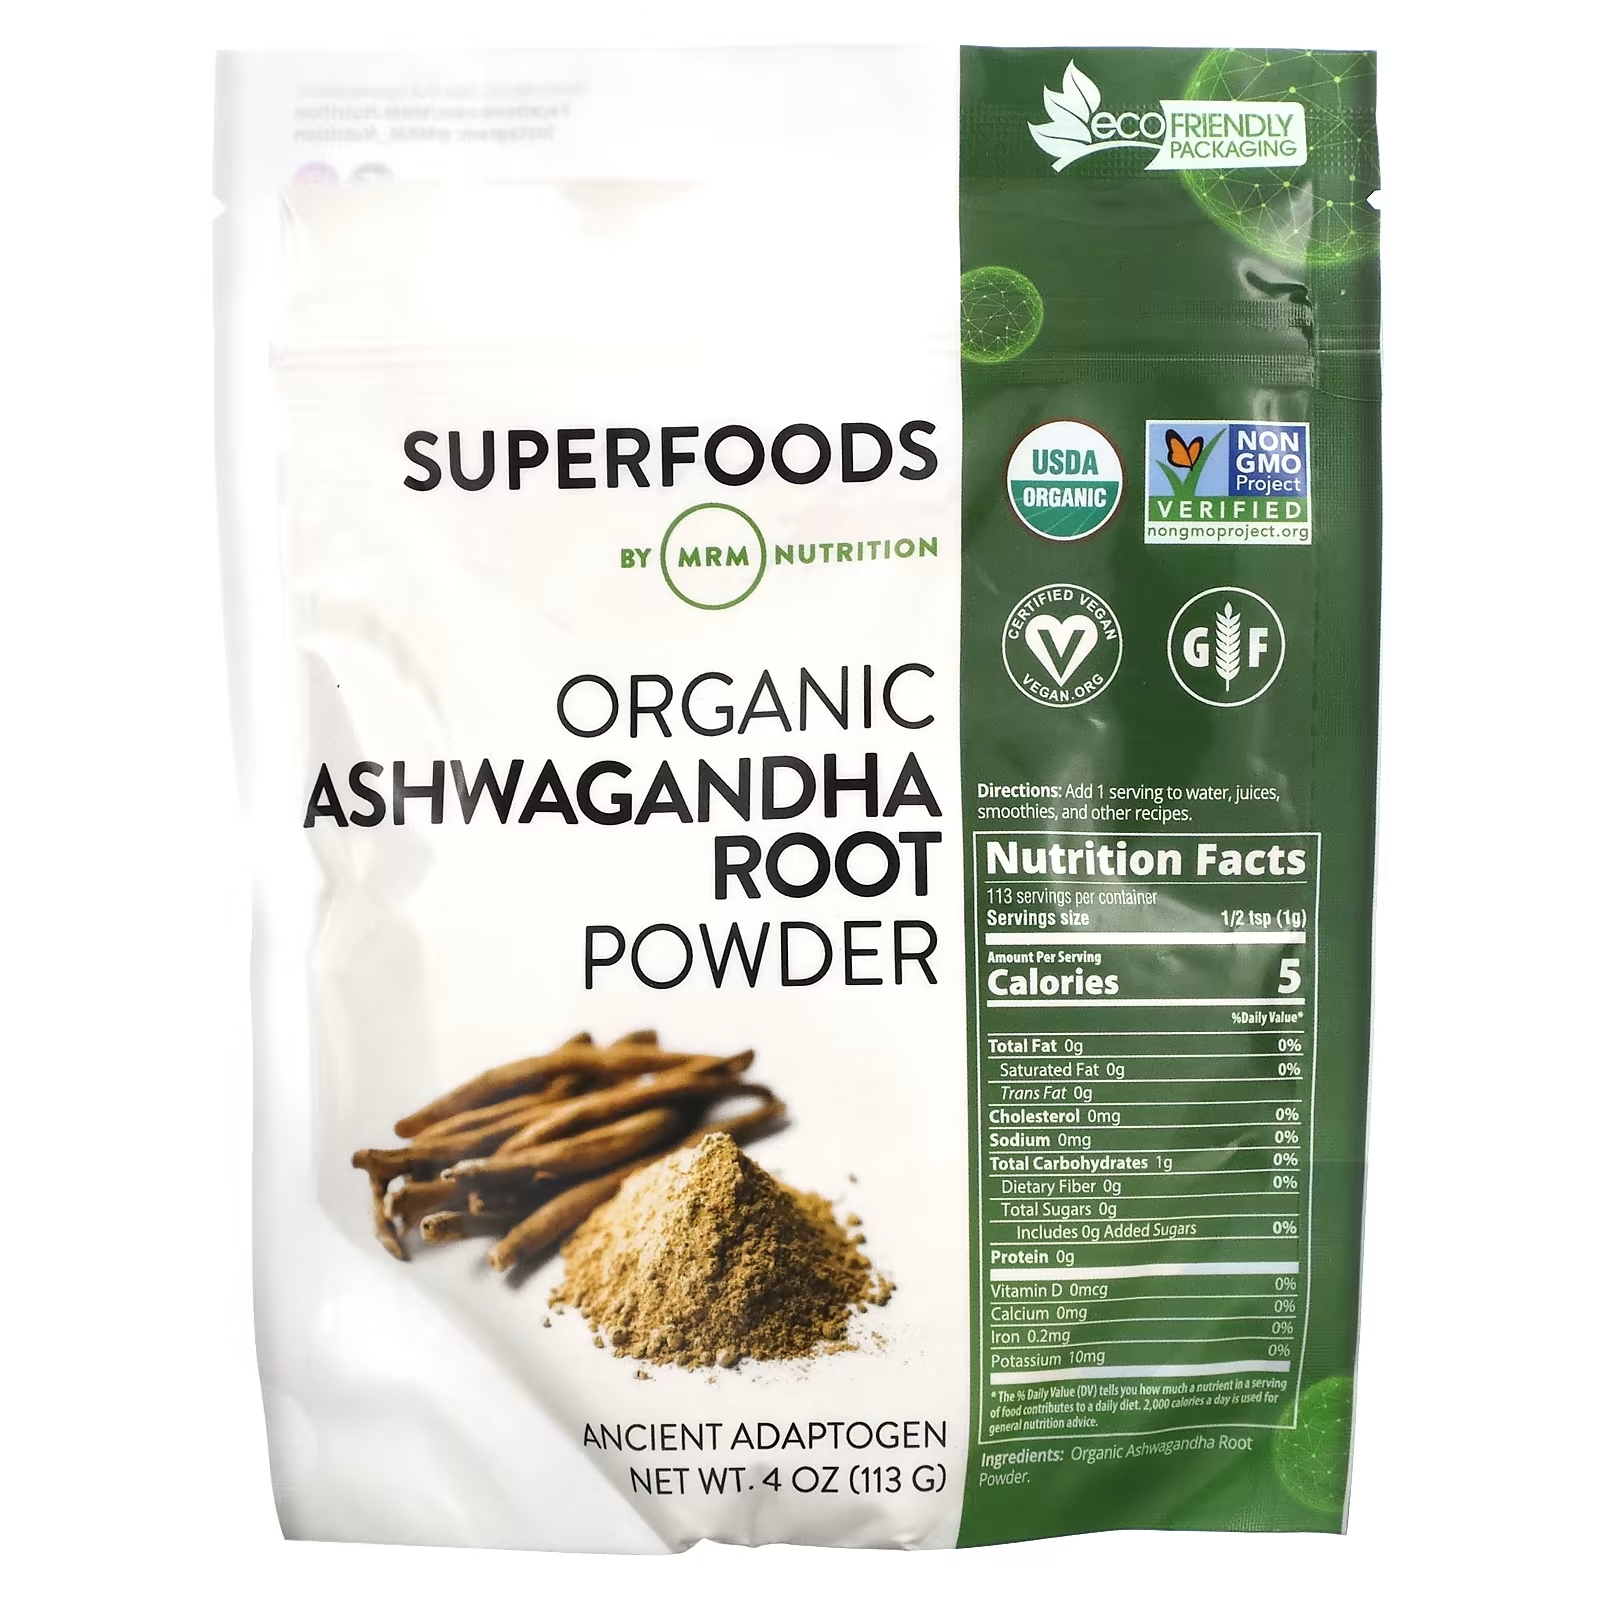 MRM Nutrition Organic Ashwagandha Root Powder, 113 г